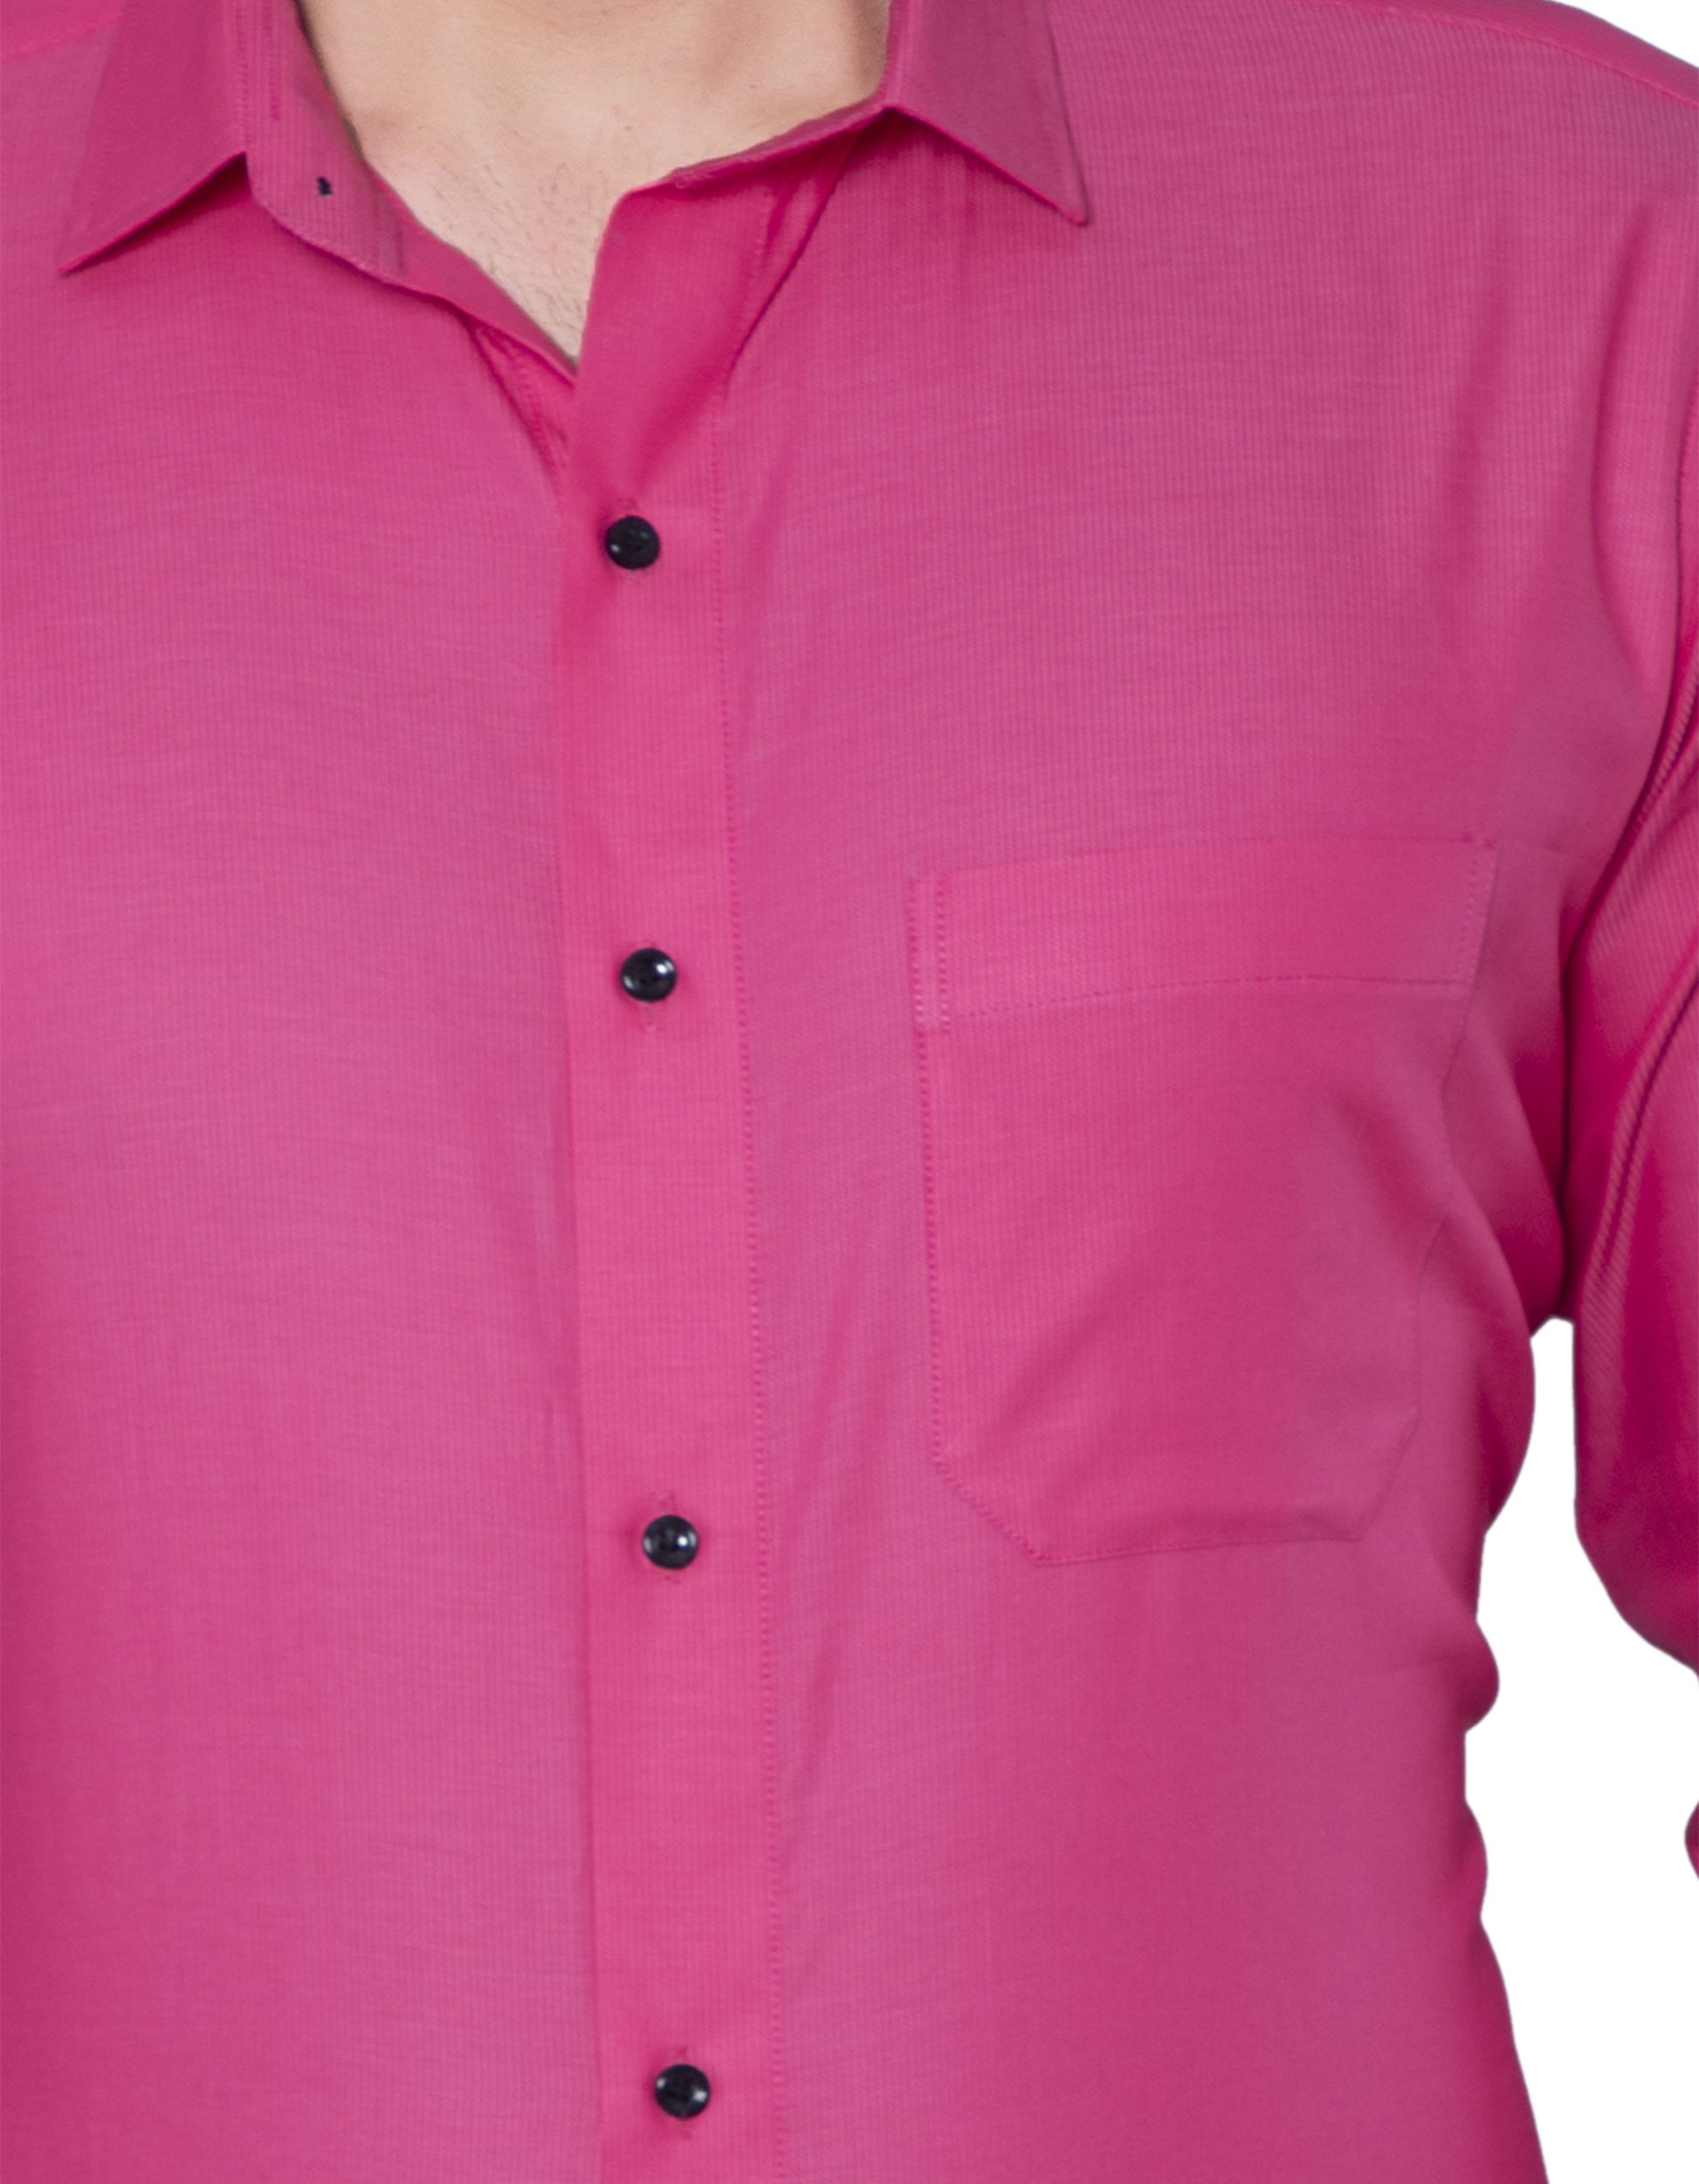 Sizzling pink plain cotton office shirt